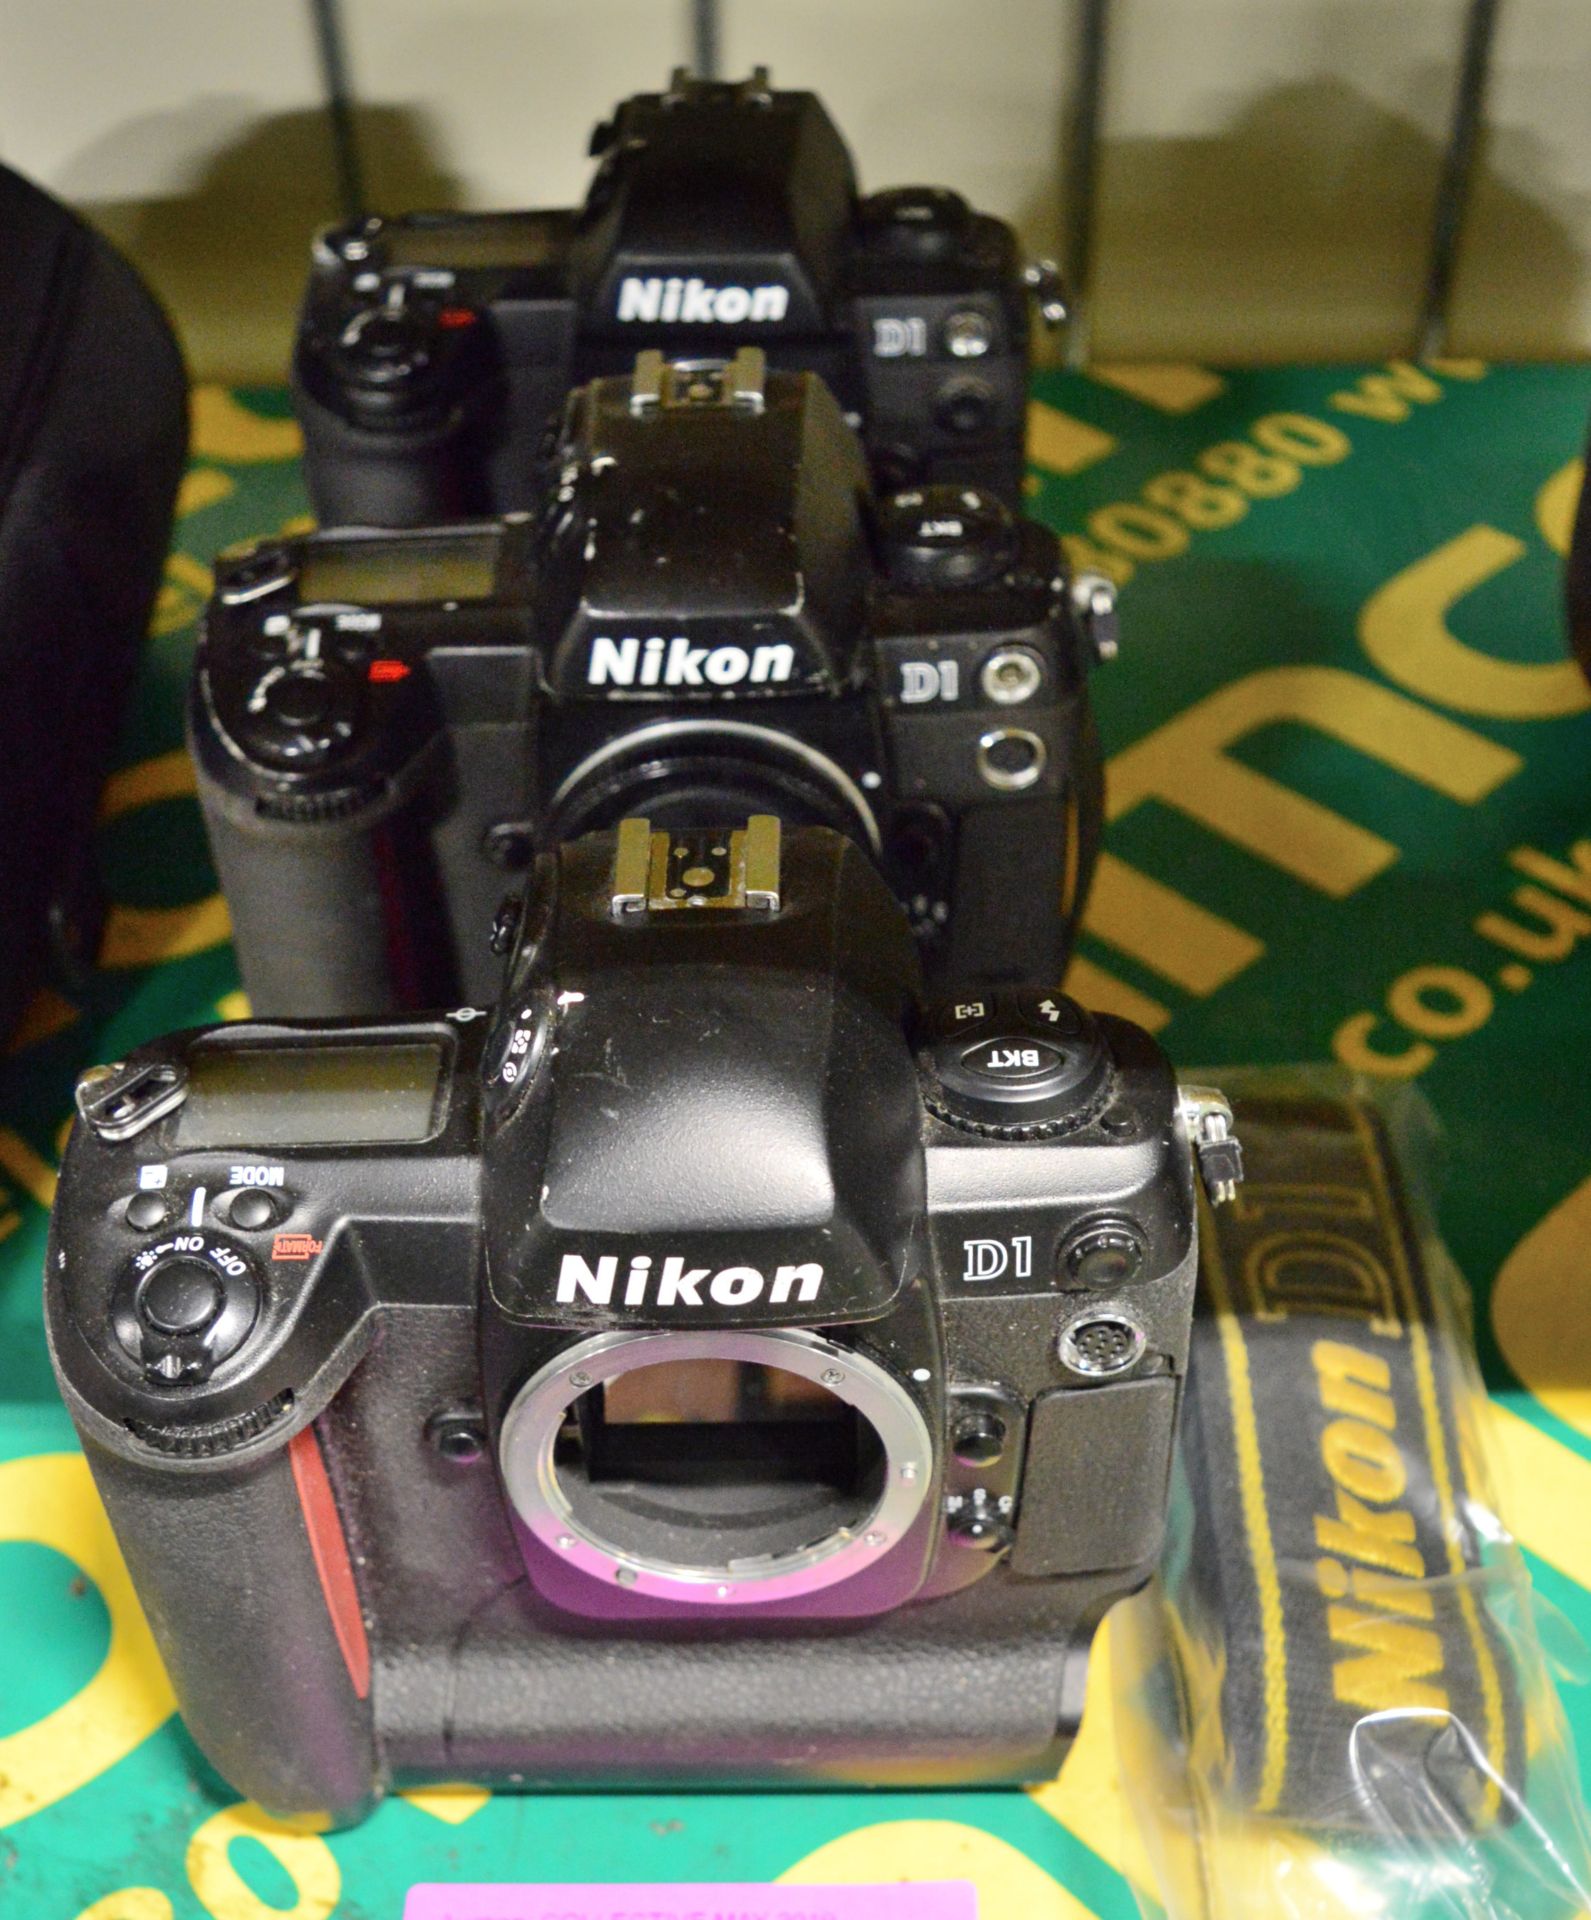 3x Nikon D1 Camera Bodies.